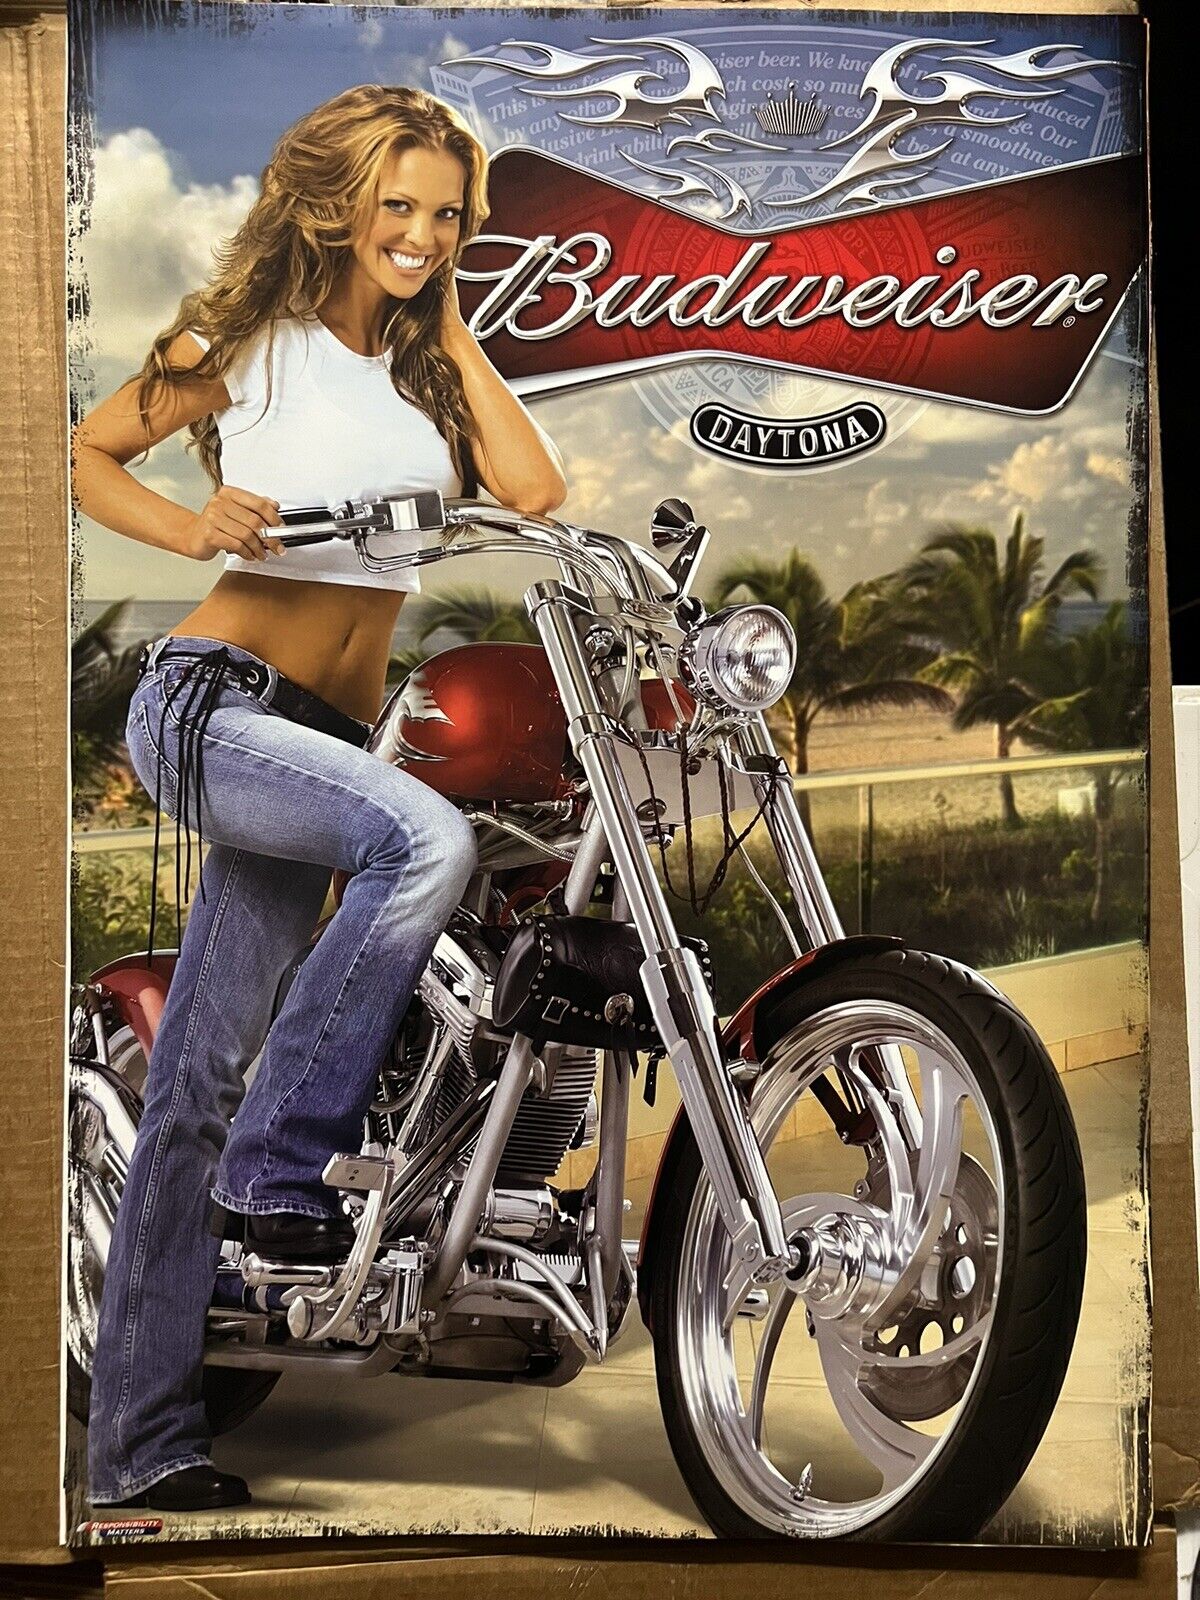 Biker Babe- Vintage promo Daytona poster from Budweiser